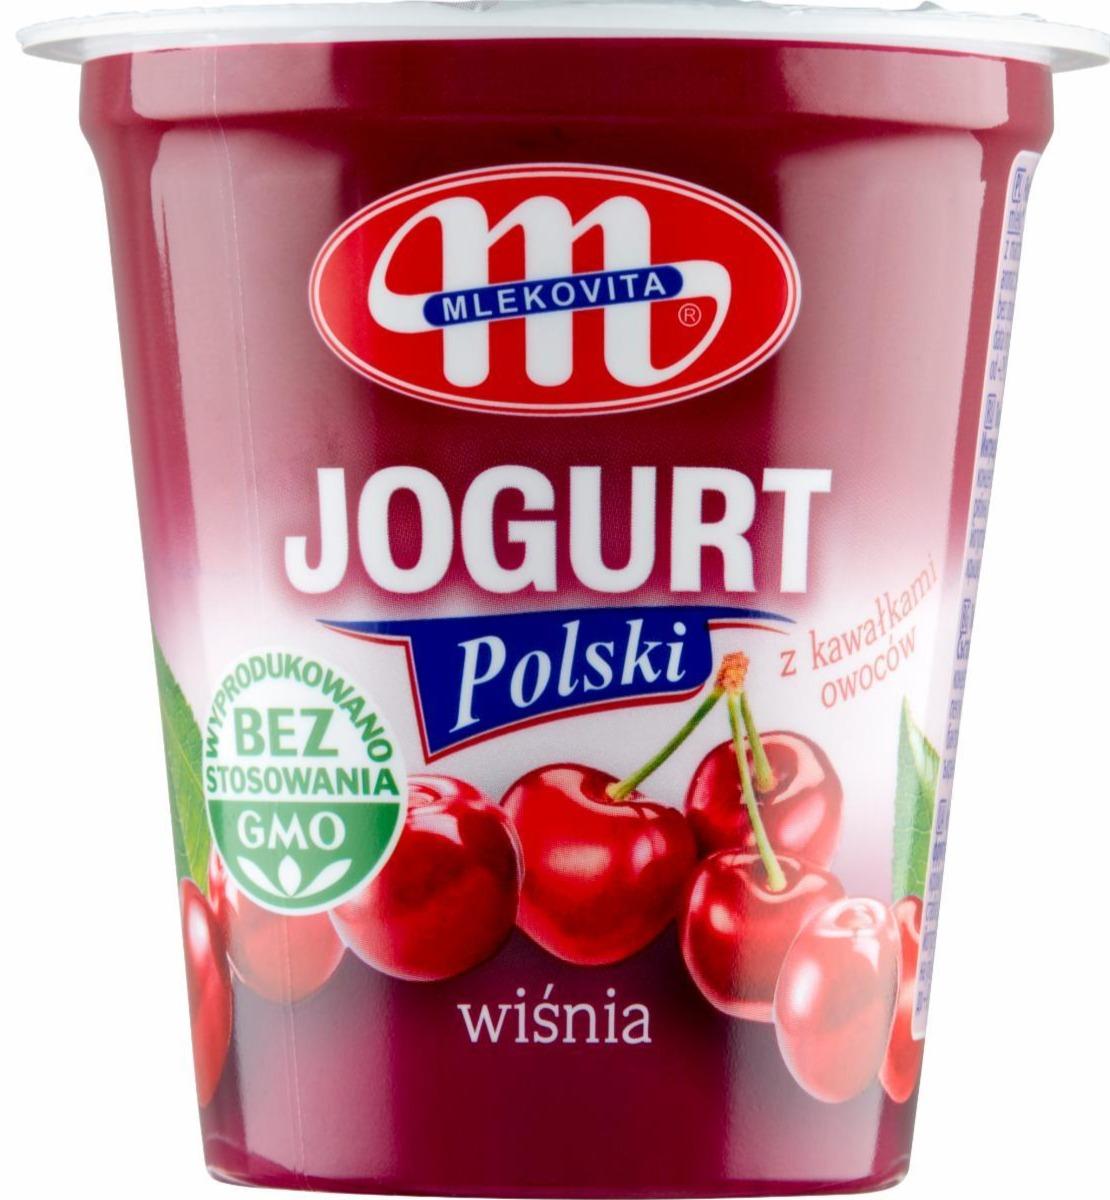 Фото - Йогурт польский вишневый Cherry Mlekovita